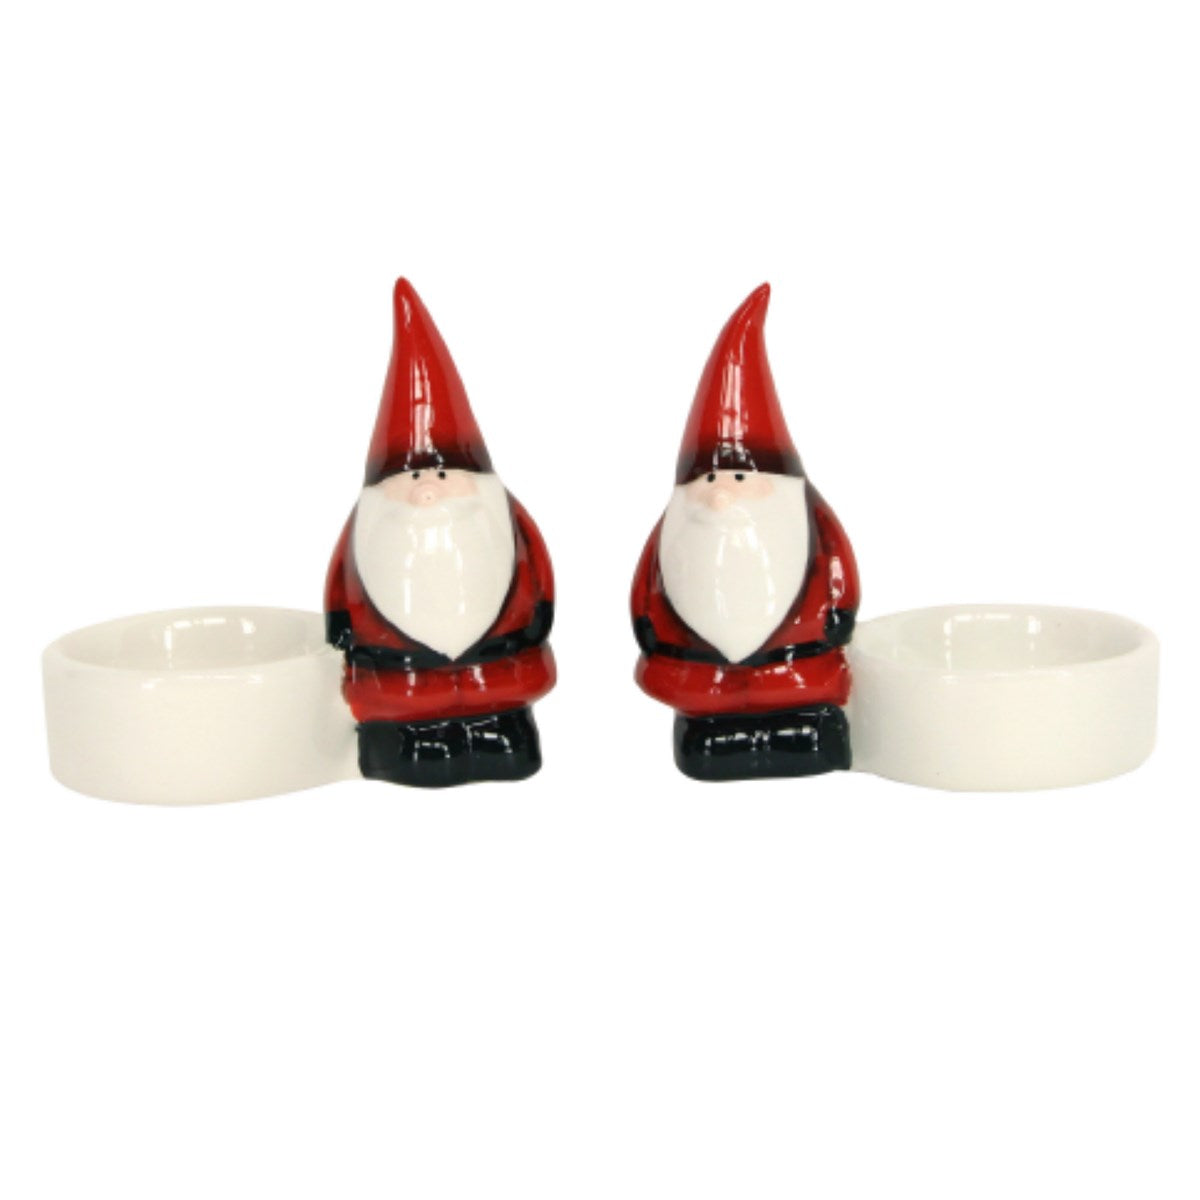 Nordic Santa Tea Light Holder - Set of 2